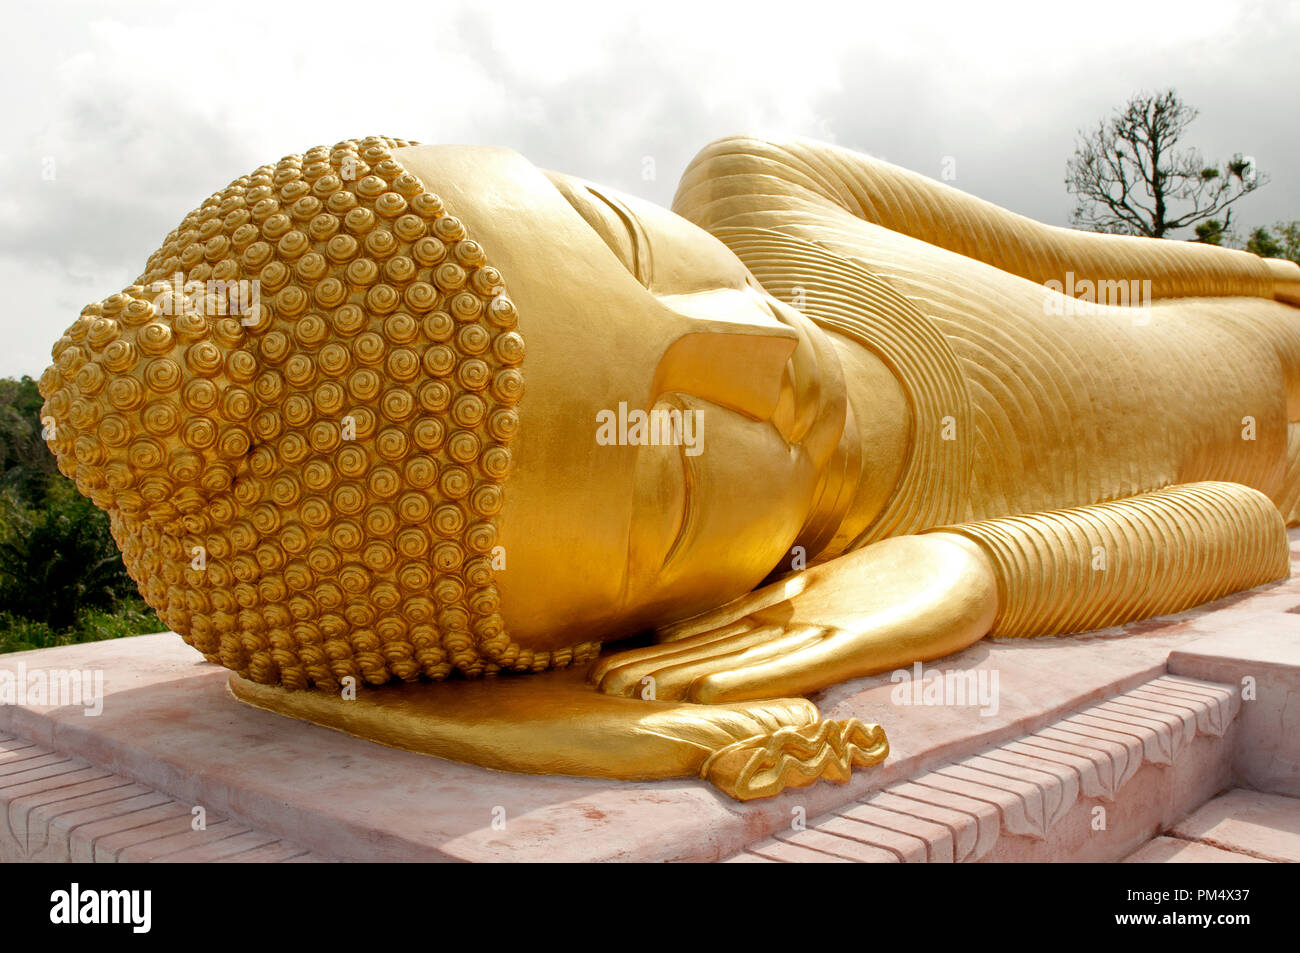 Leiter der liegende Buddha - Wat Buddha di Pra Korn - Koh Samui - Thailand Tête de Bouddha Bouddha couché-Tempel di Pra Korn - Koh Samui - thaïlande Stockfoto